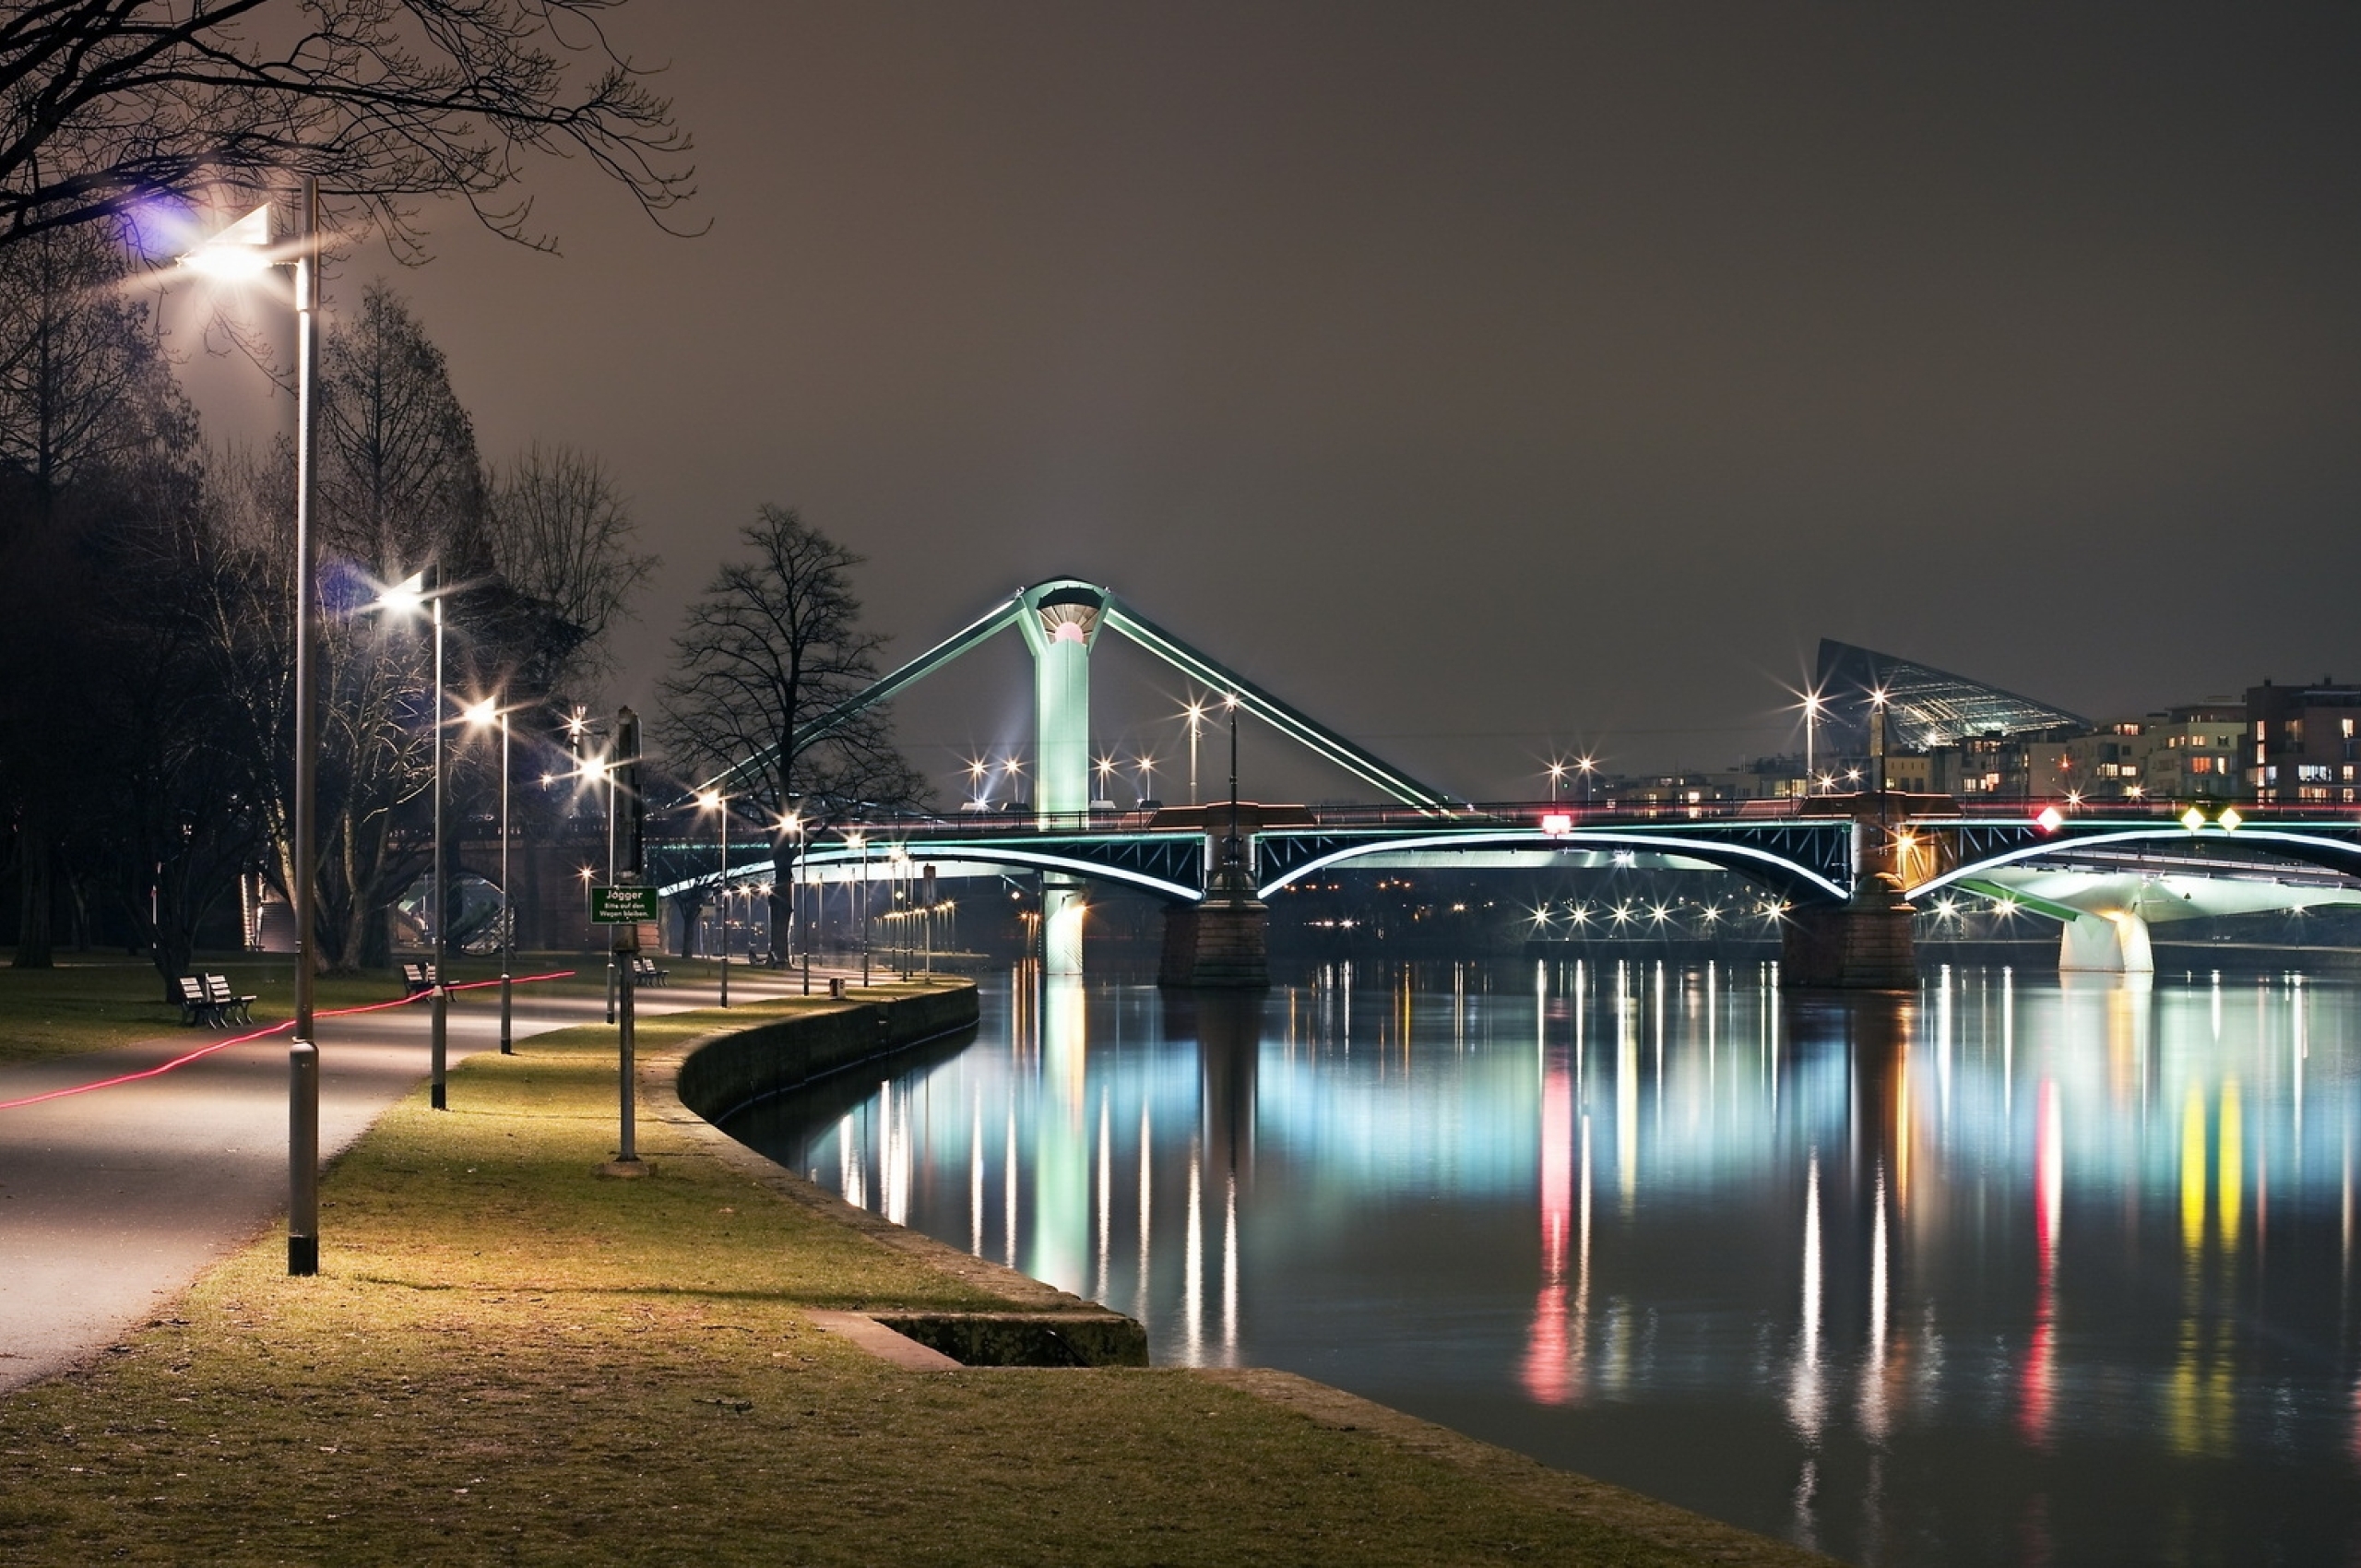 Свет над городом. Парк в Найт Сити. Набережная Новосибирск ночью мост. Мост Ривер парк. Новосибирск River Park вид на мост.